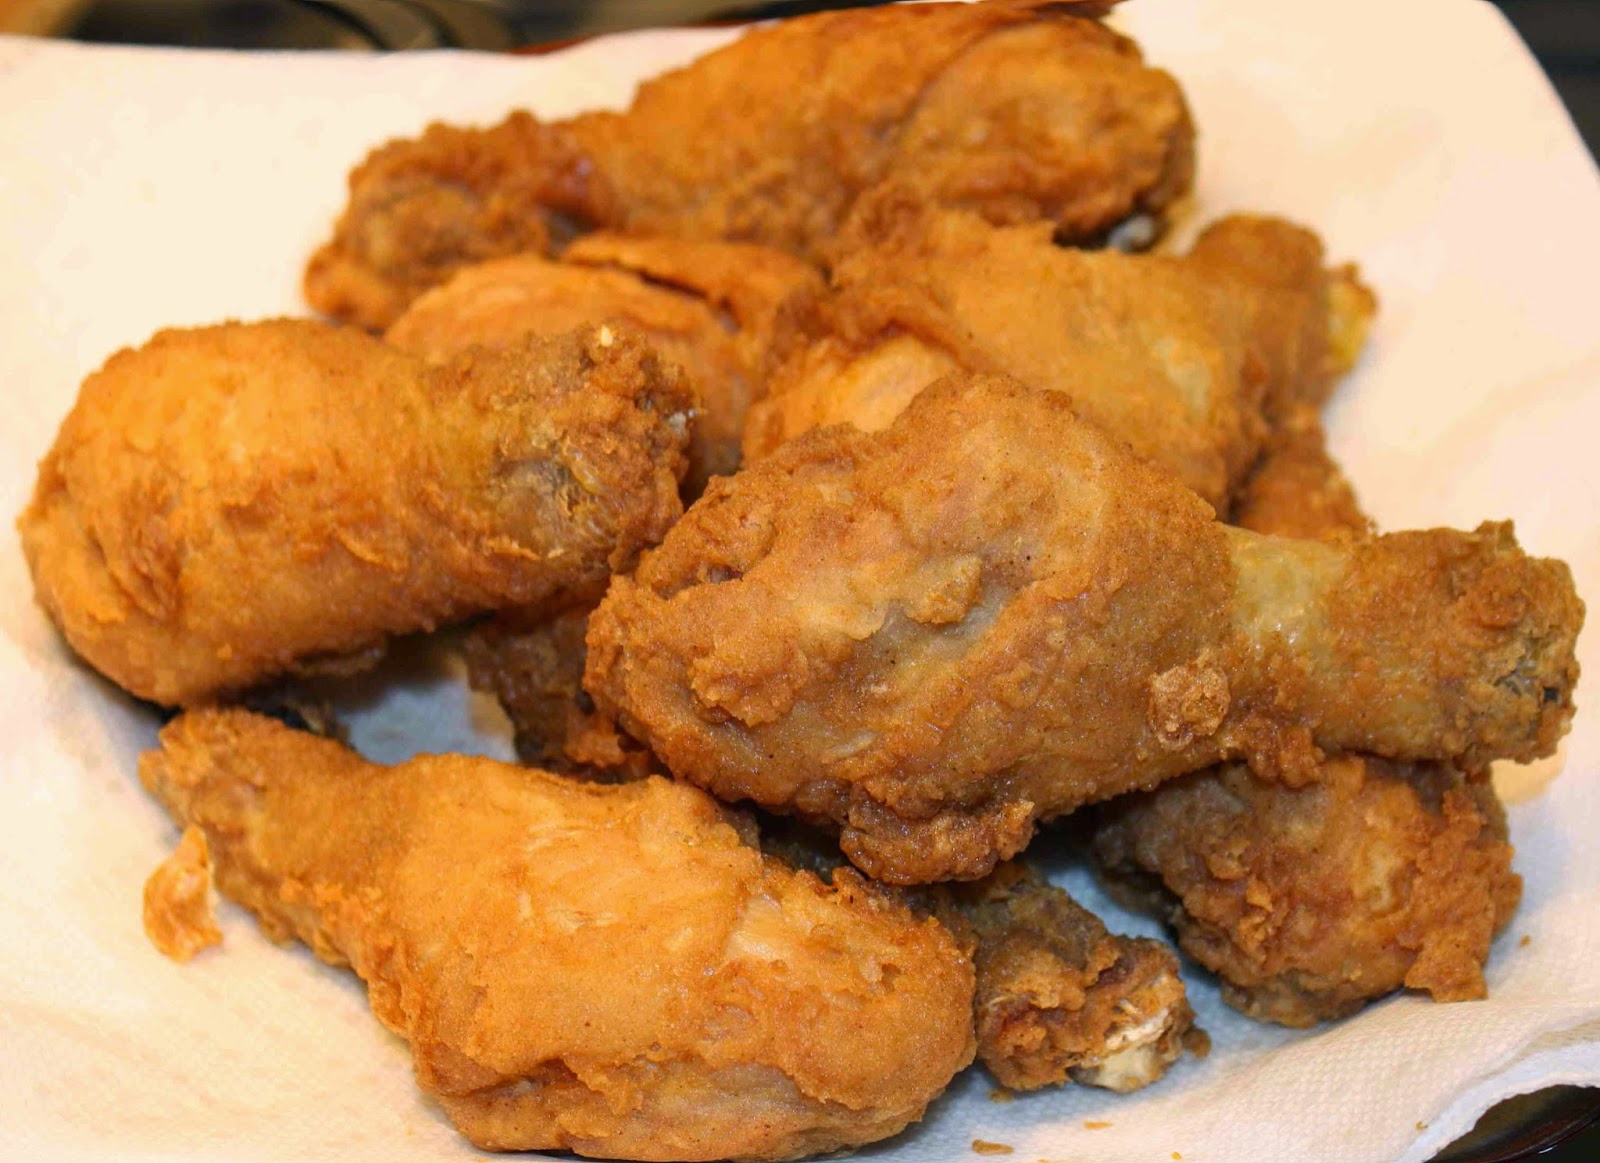 kfc-chicken-drumstick-dark-meat-bad-for-your-health